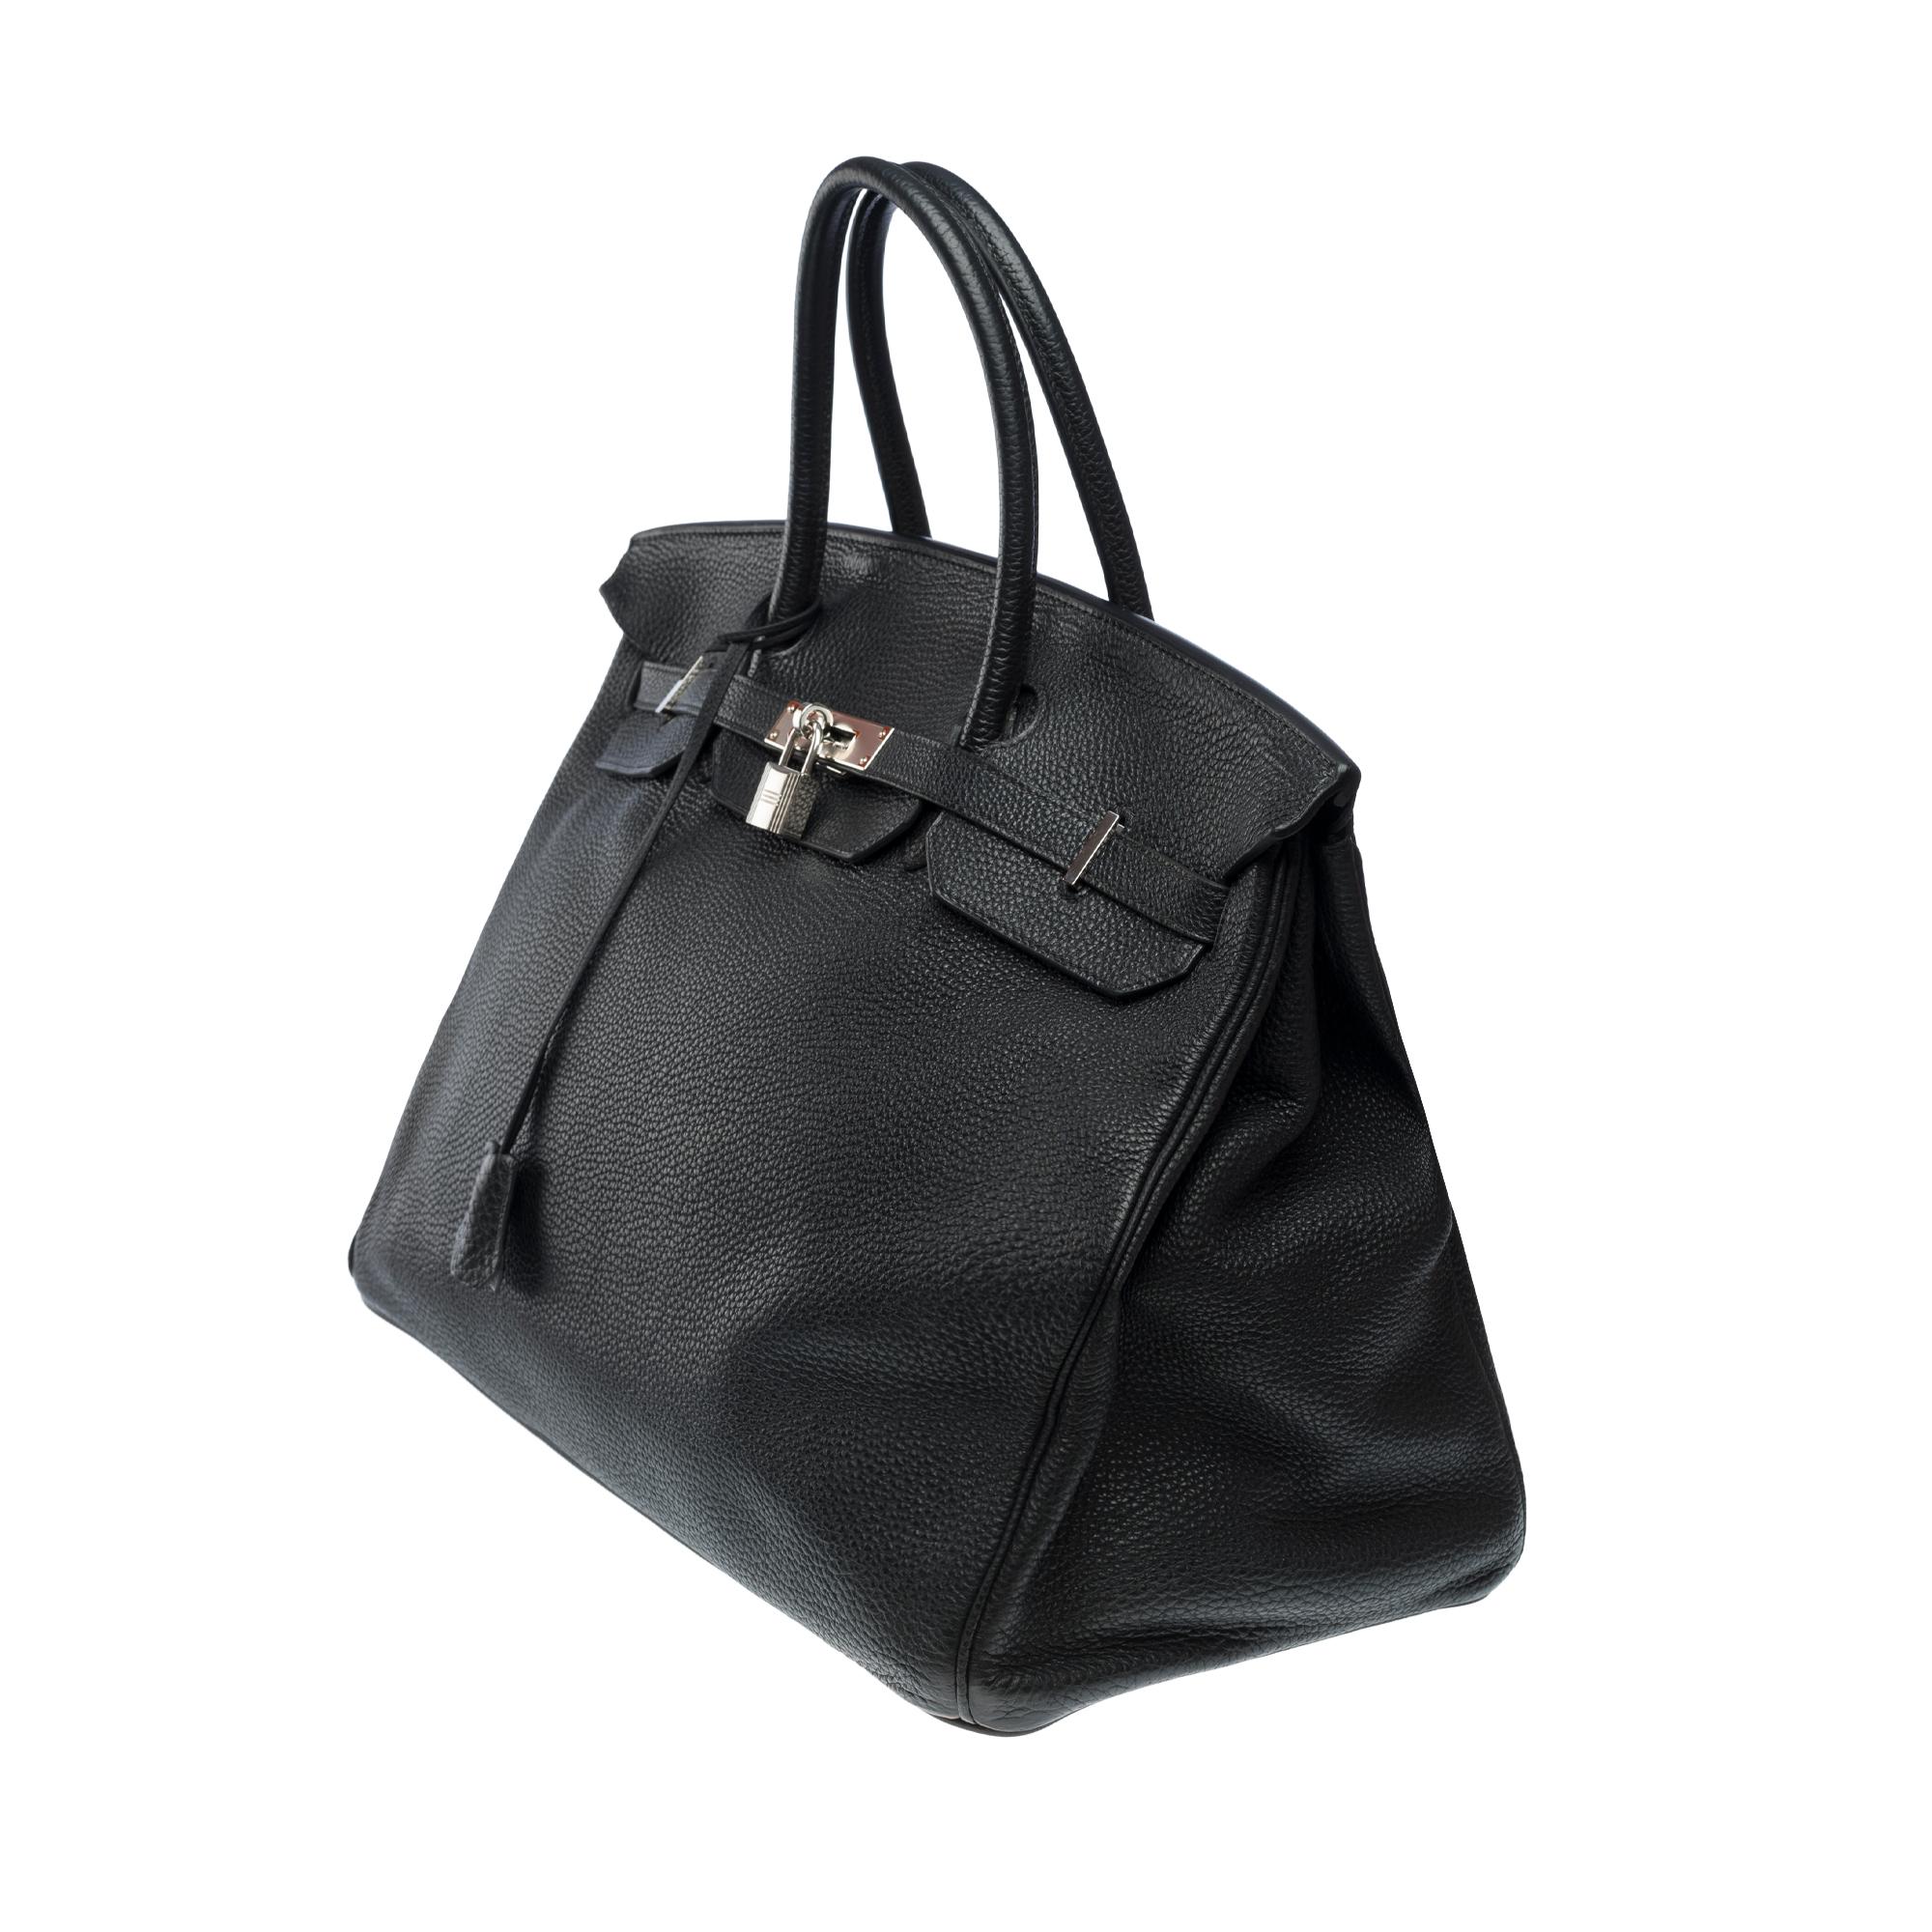 Women's or Men's Very Classy Hermes Birkin 40 handbag in Black Togo Calf leather, SHW